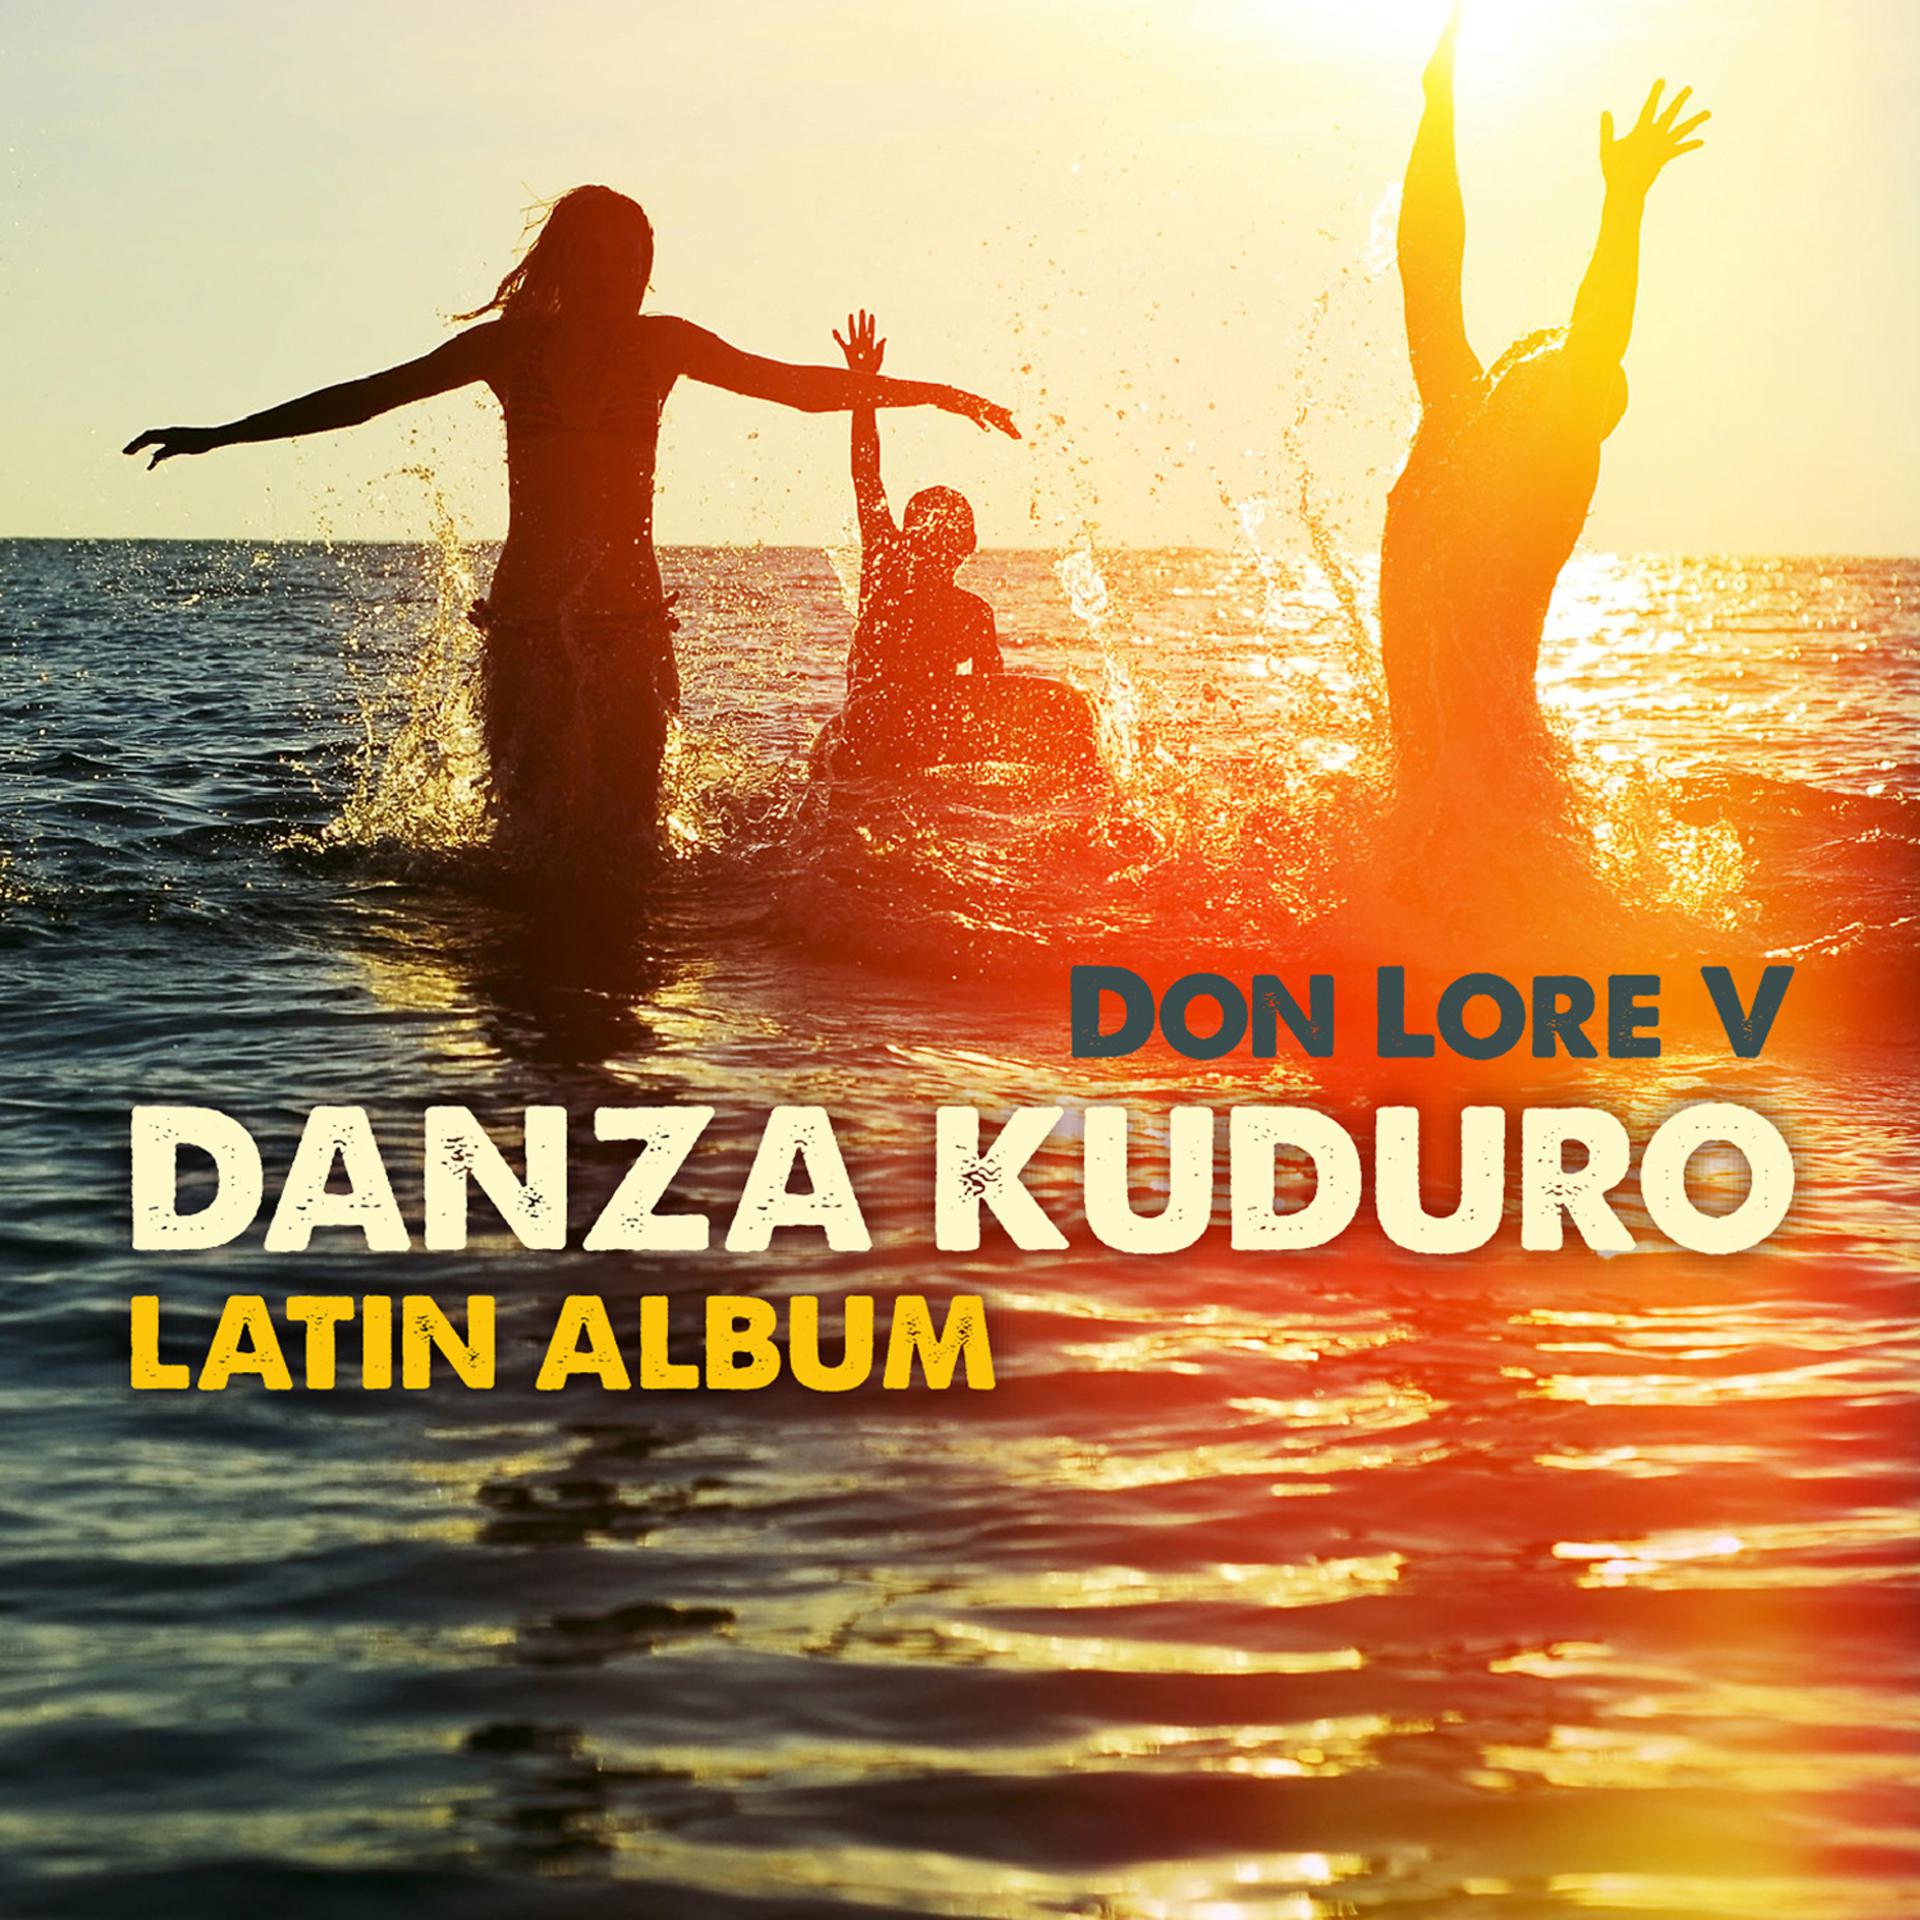 Lore v. Danza Kuduro обложка. Don Lore v. Don Omar Danza Kuduro. Danza Kuduro don Lore v.